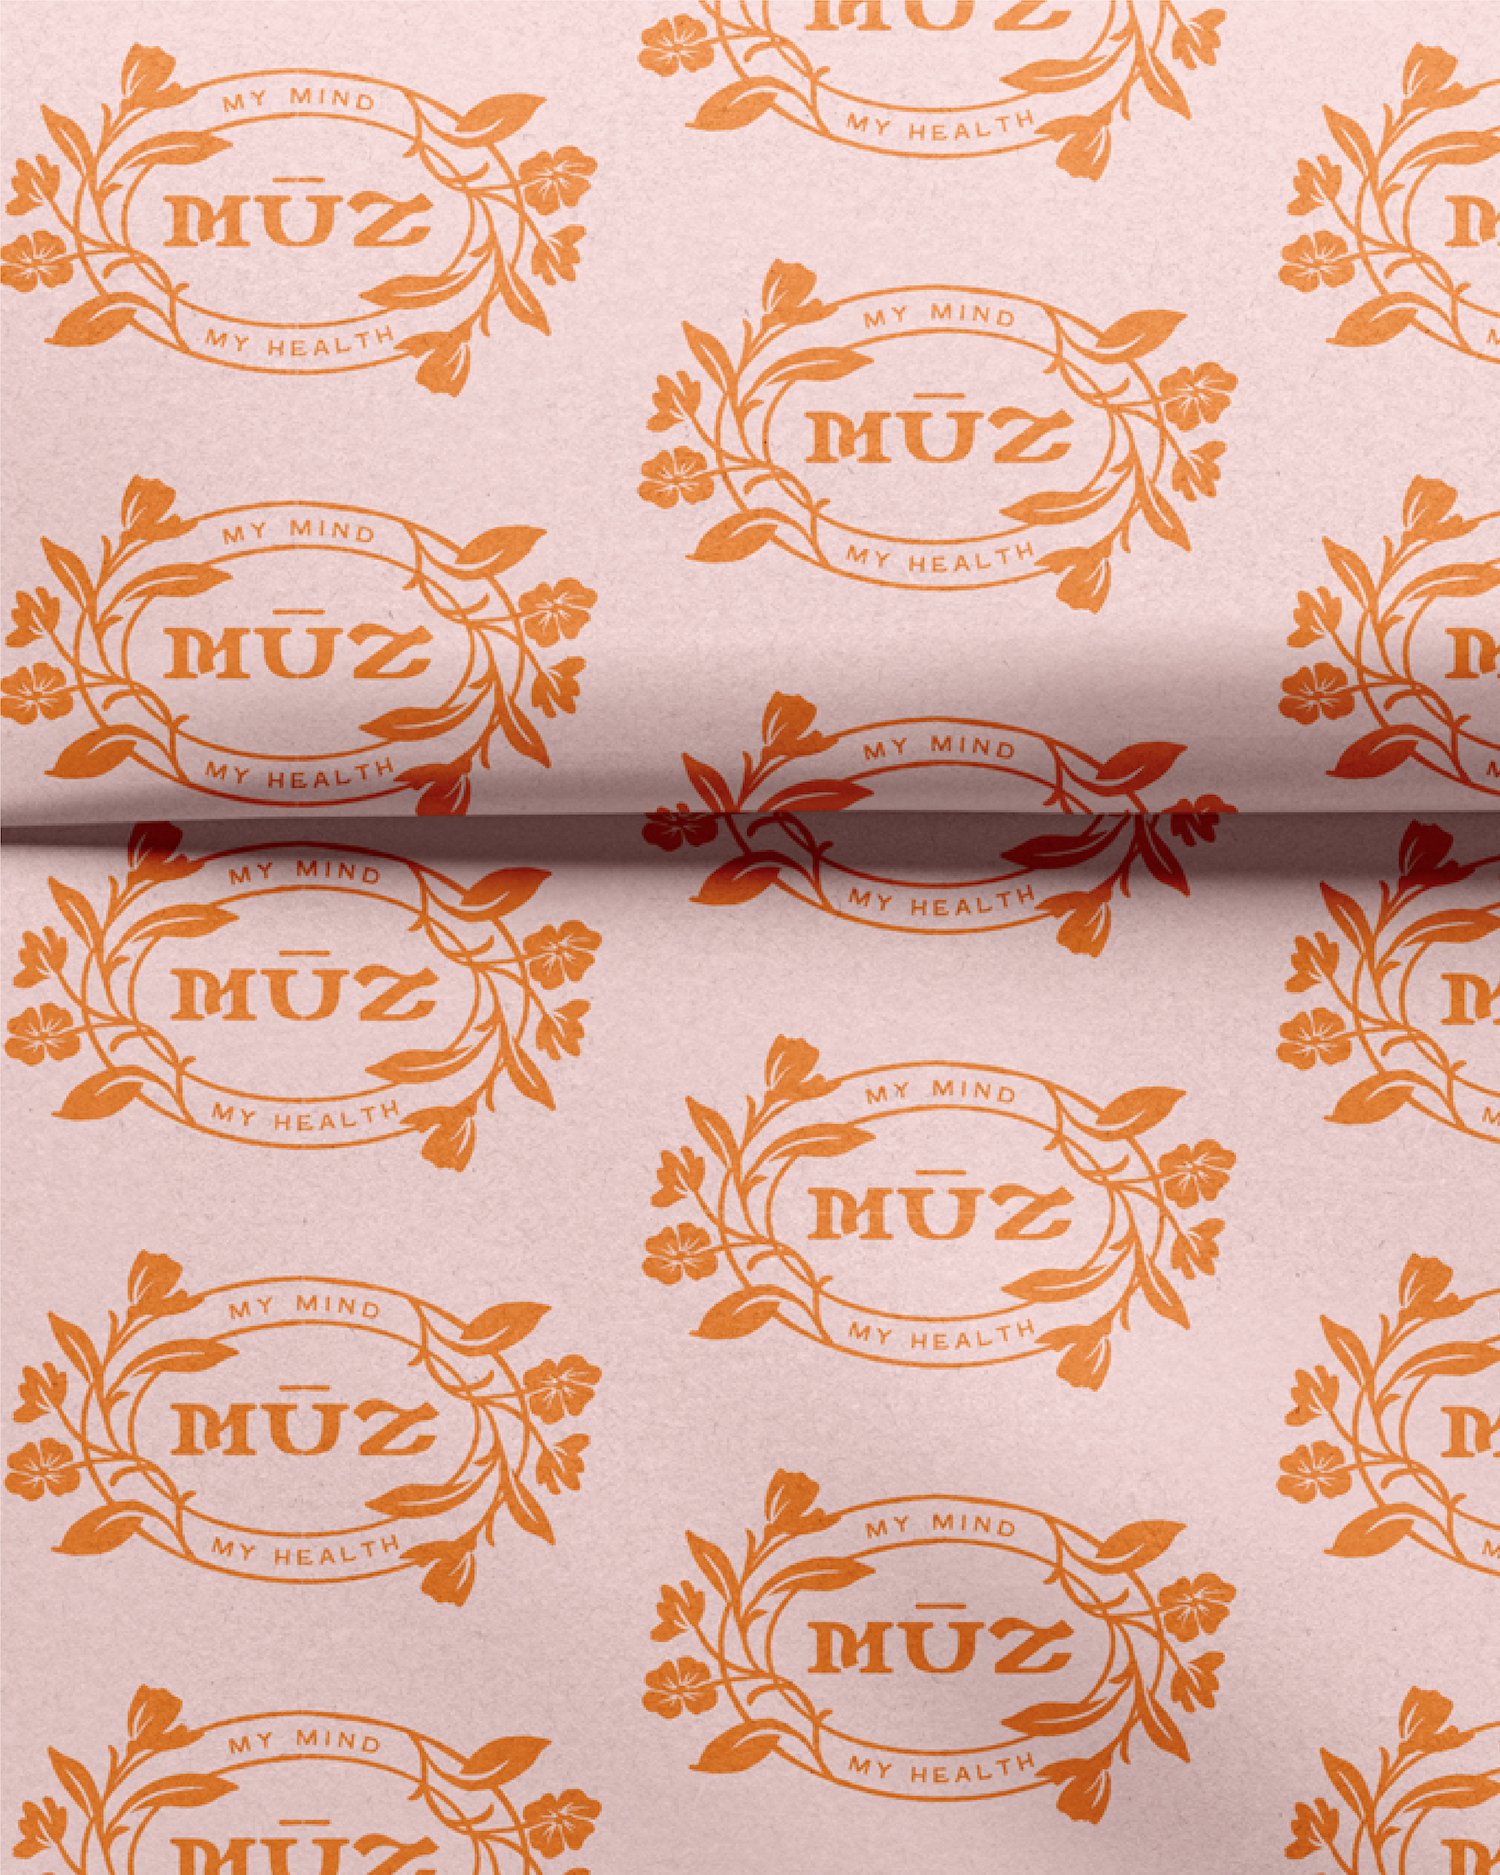 MUZ-packaging-design-30.jpg